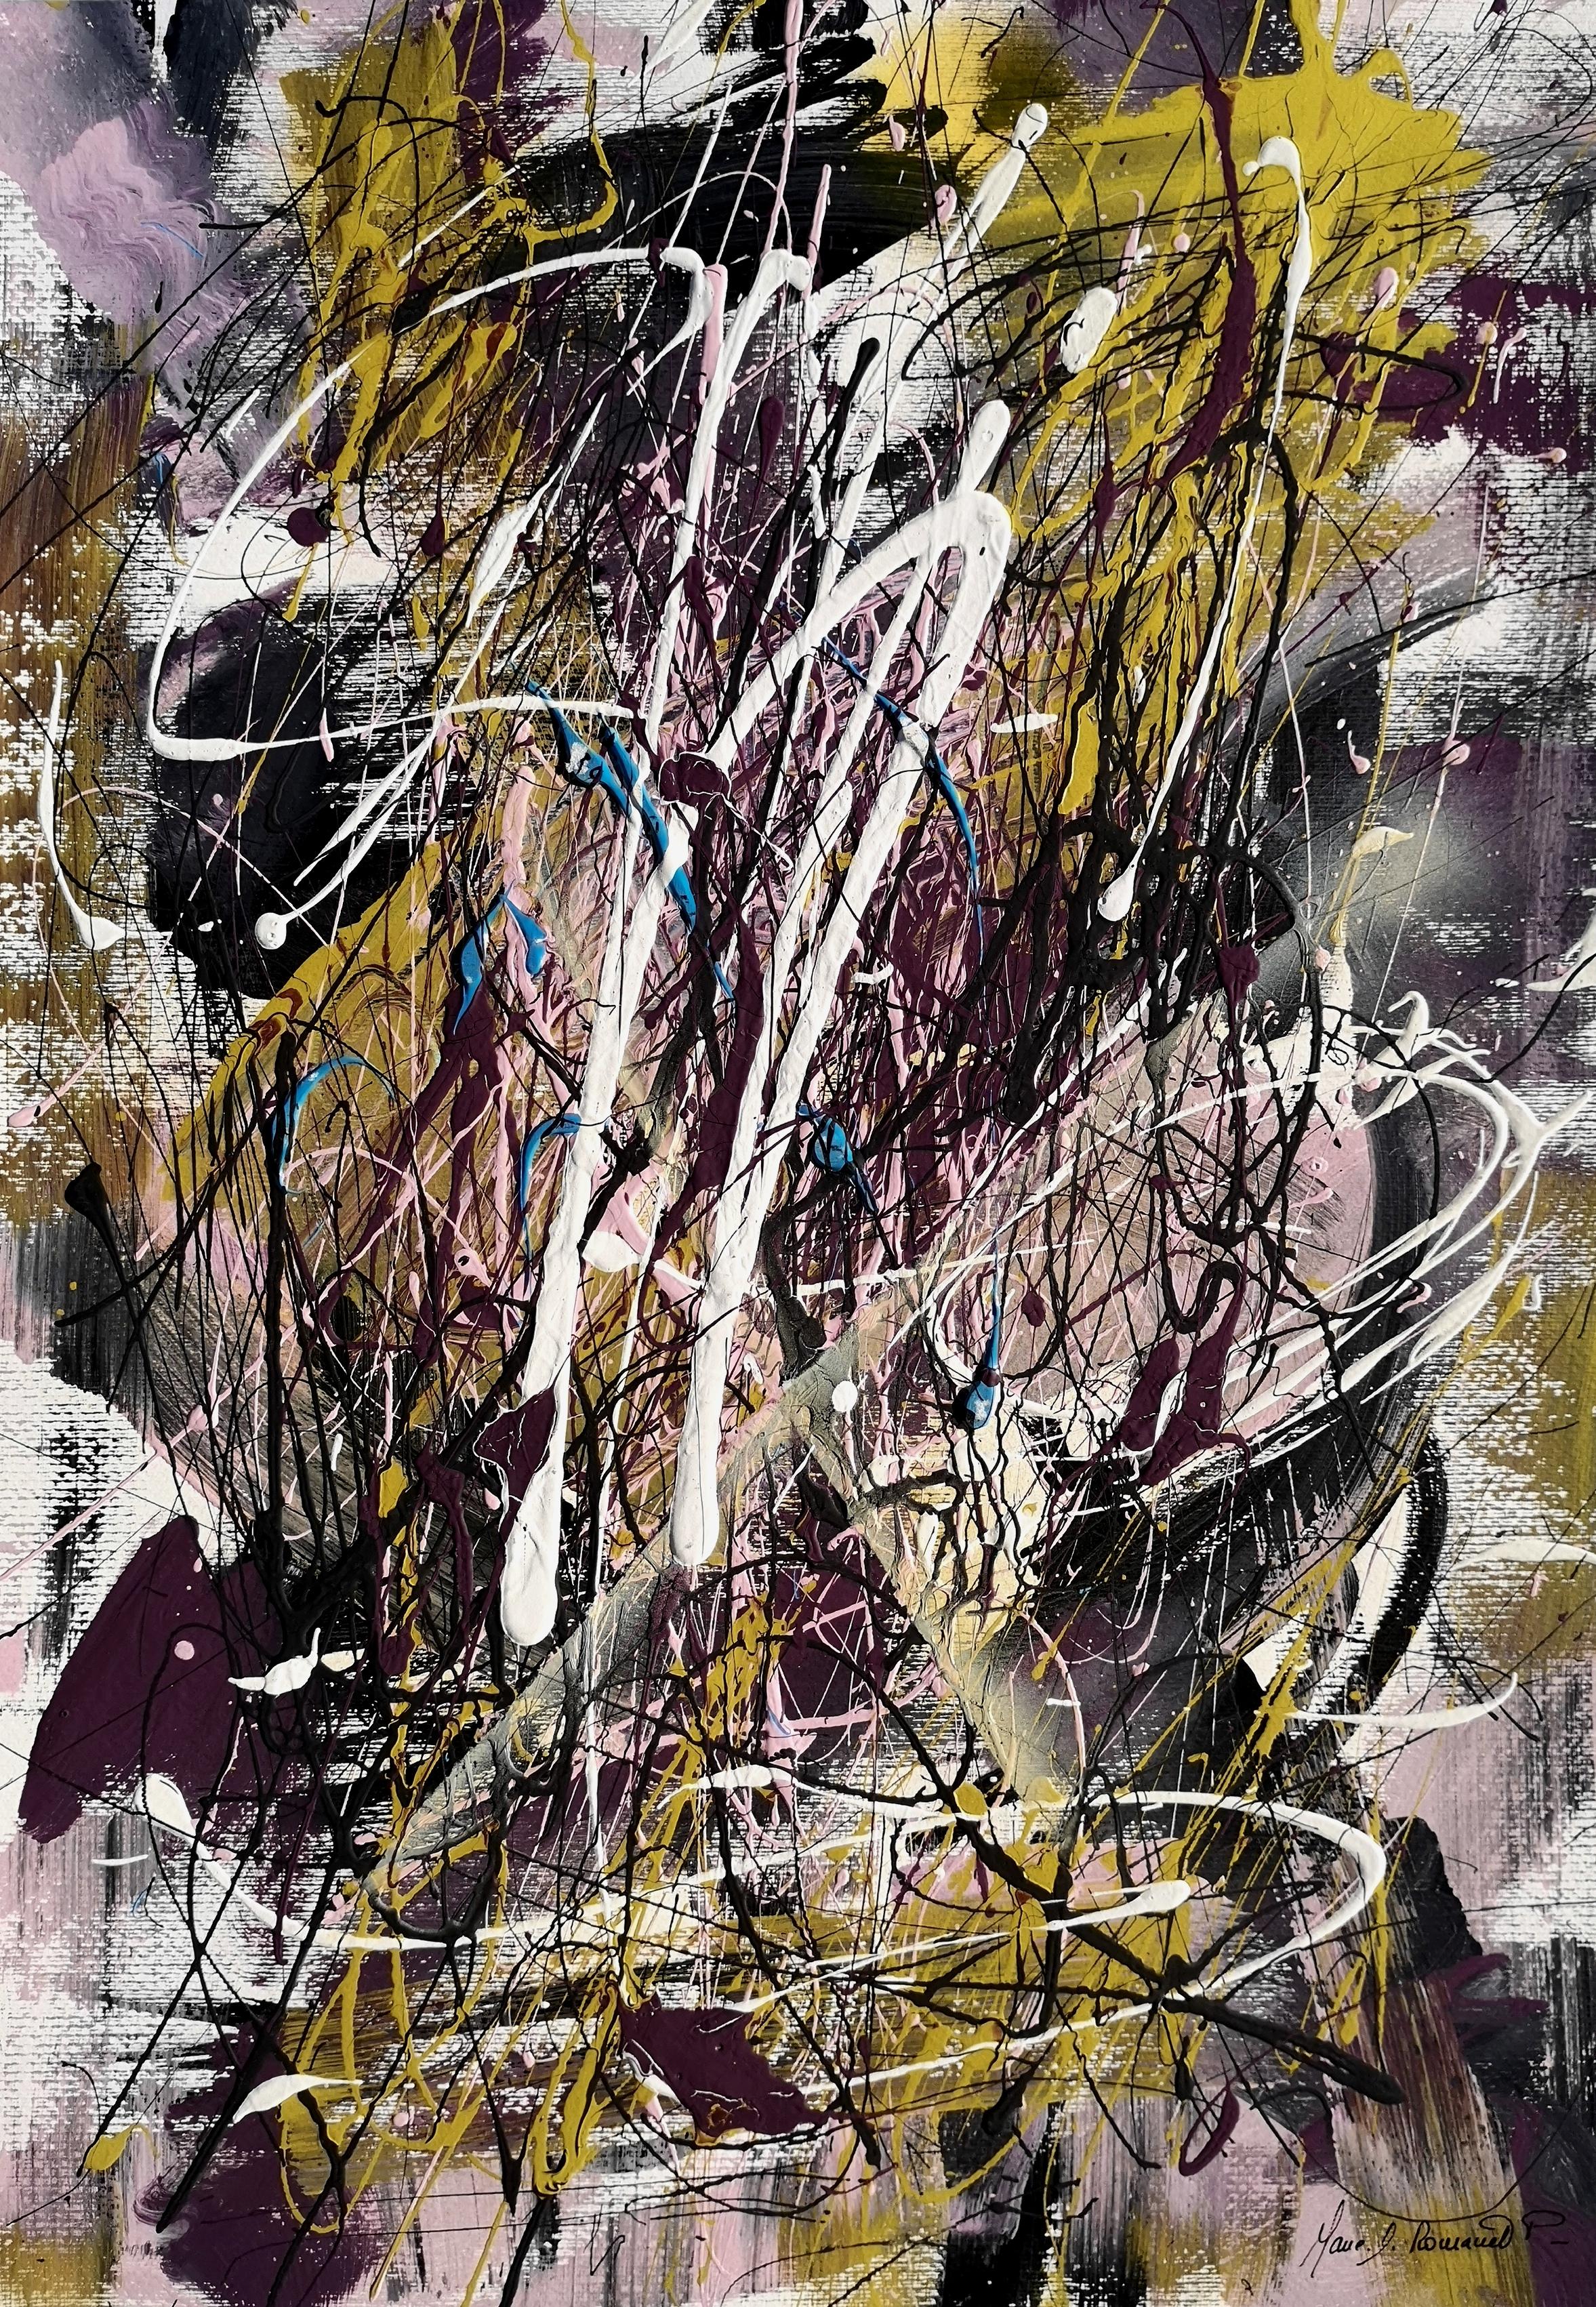 Abstract Painting Marie-Laure Romanet Prin company - « LA ROUE DU KARMA »   Le style Pollock